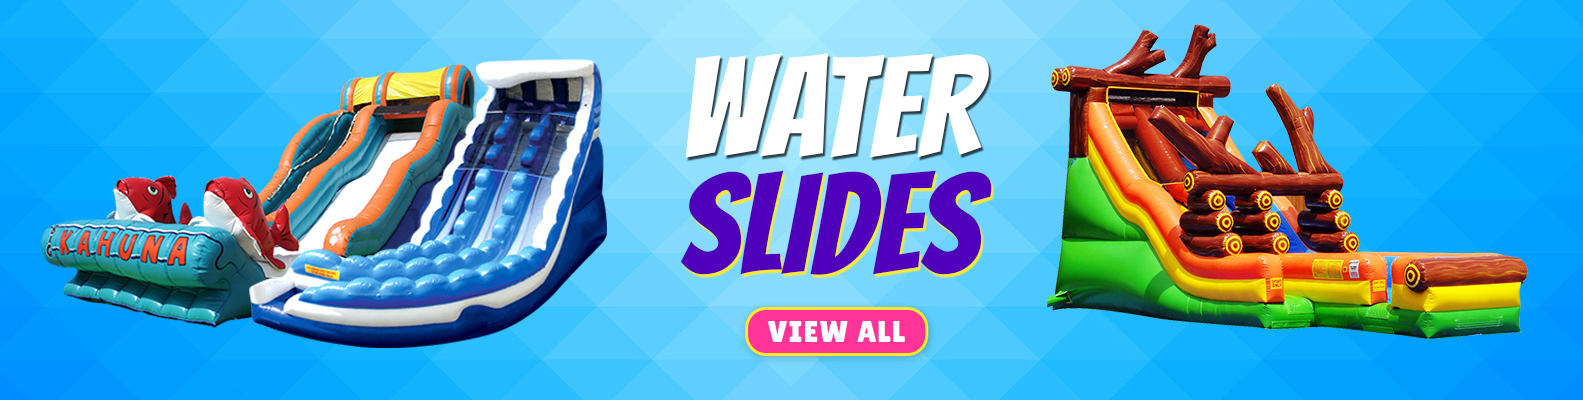 inflatable water slide rentals in Surprise